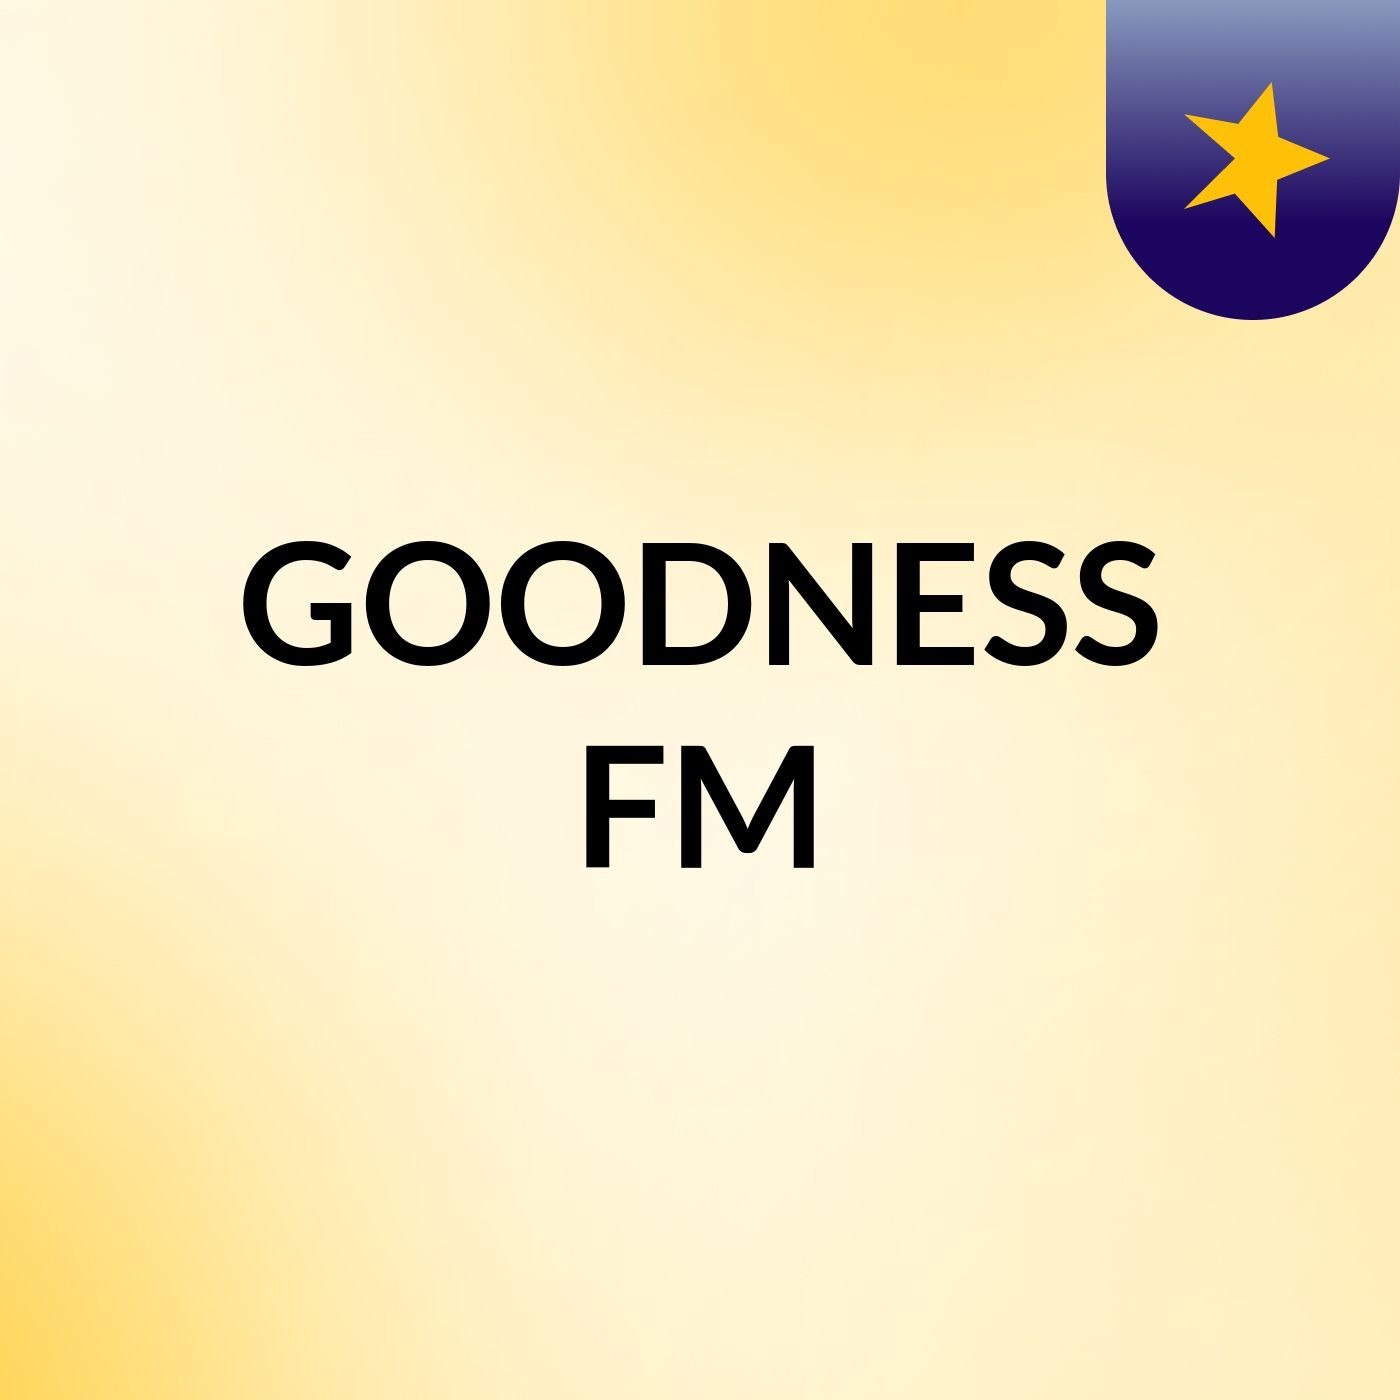 GOODNESS FM